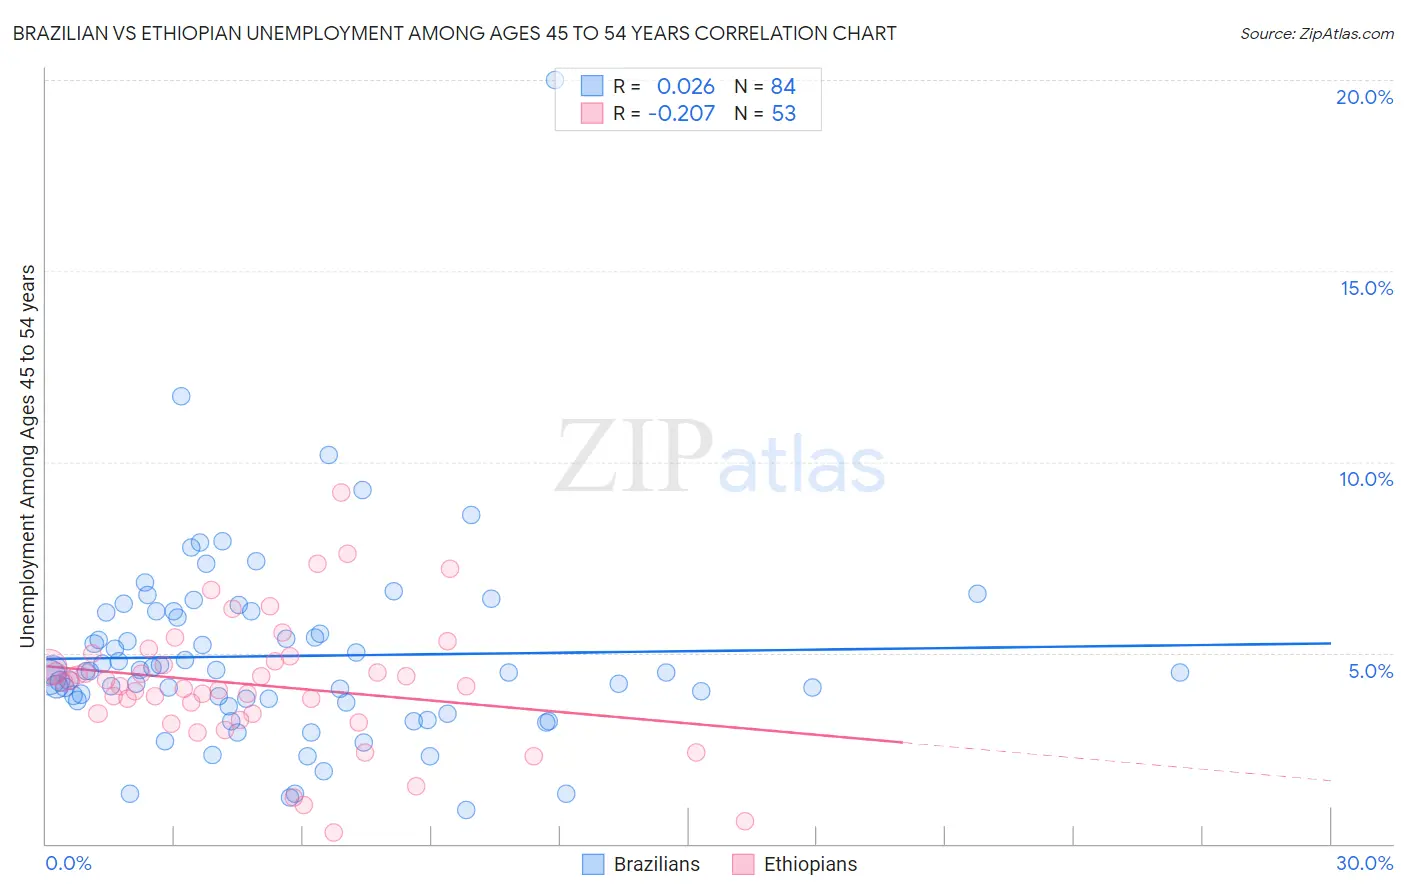 Brazilian vs Ethiopian Unemployment Among Ages 45 to 54 years